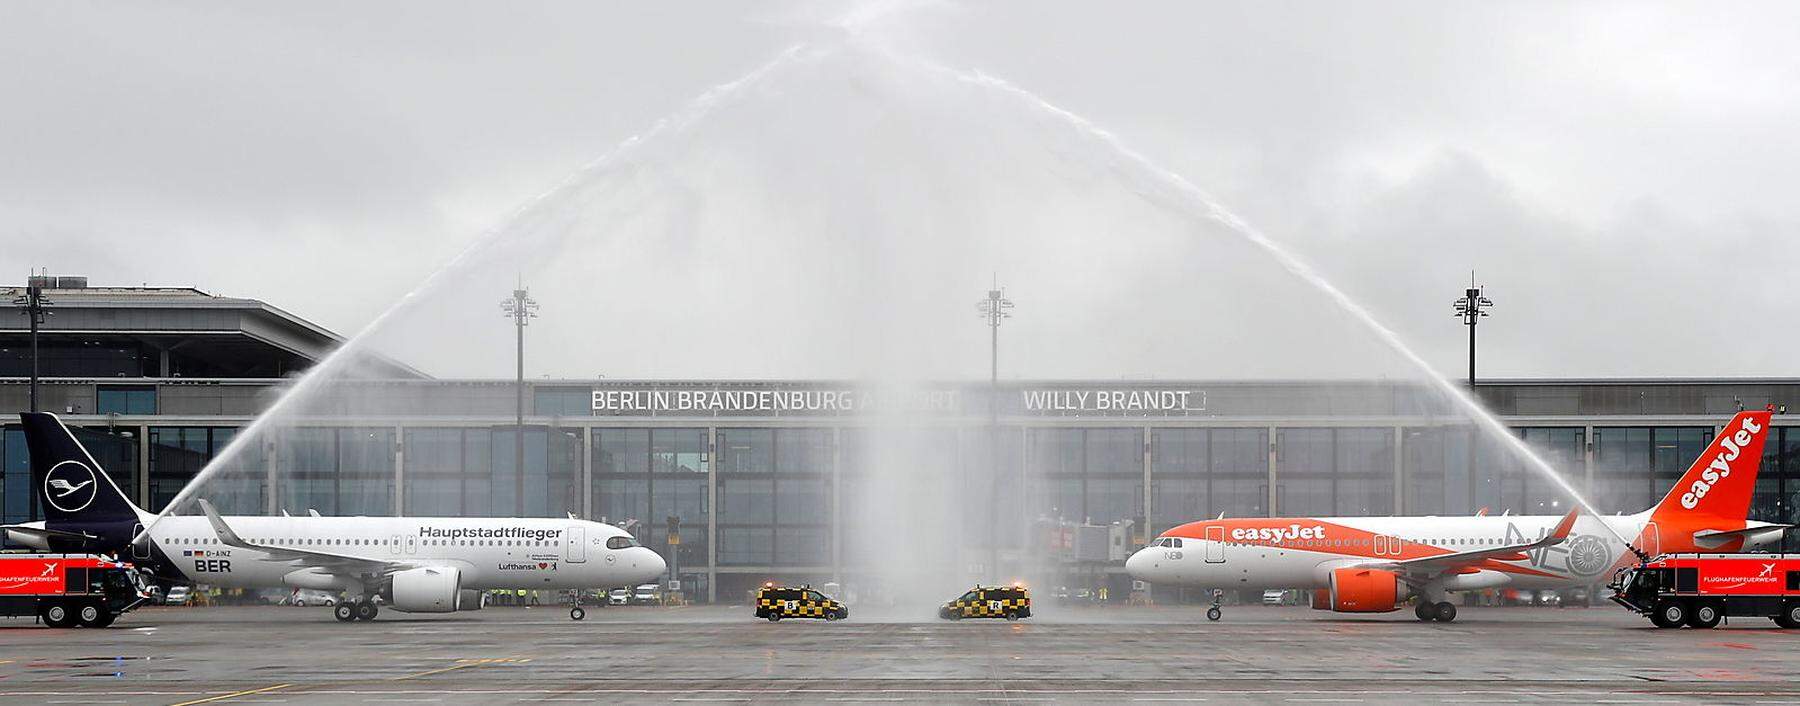 Official opening of the new Berlin-Brandenburg Airport in Schoenefeld